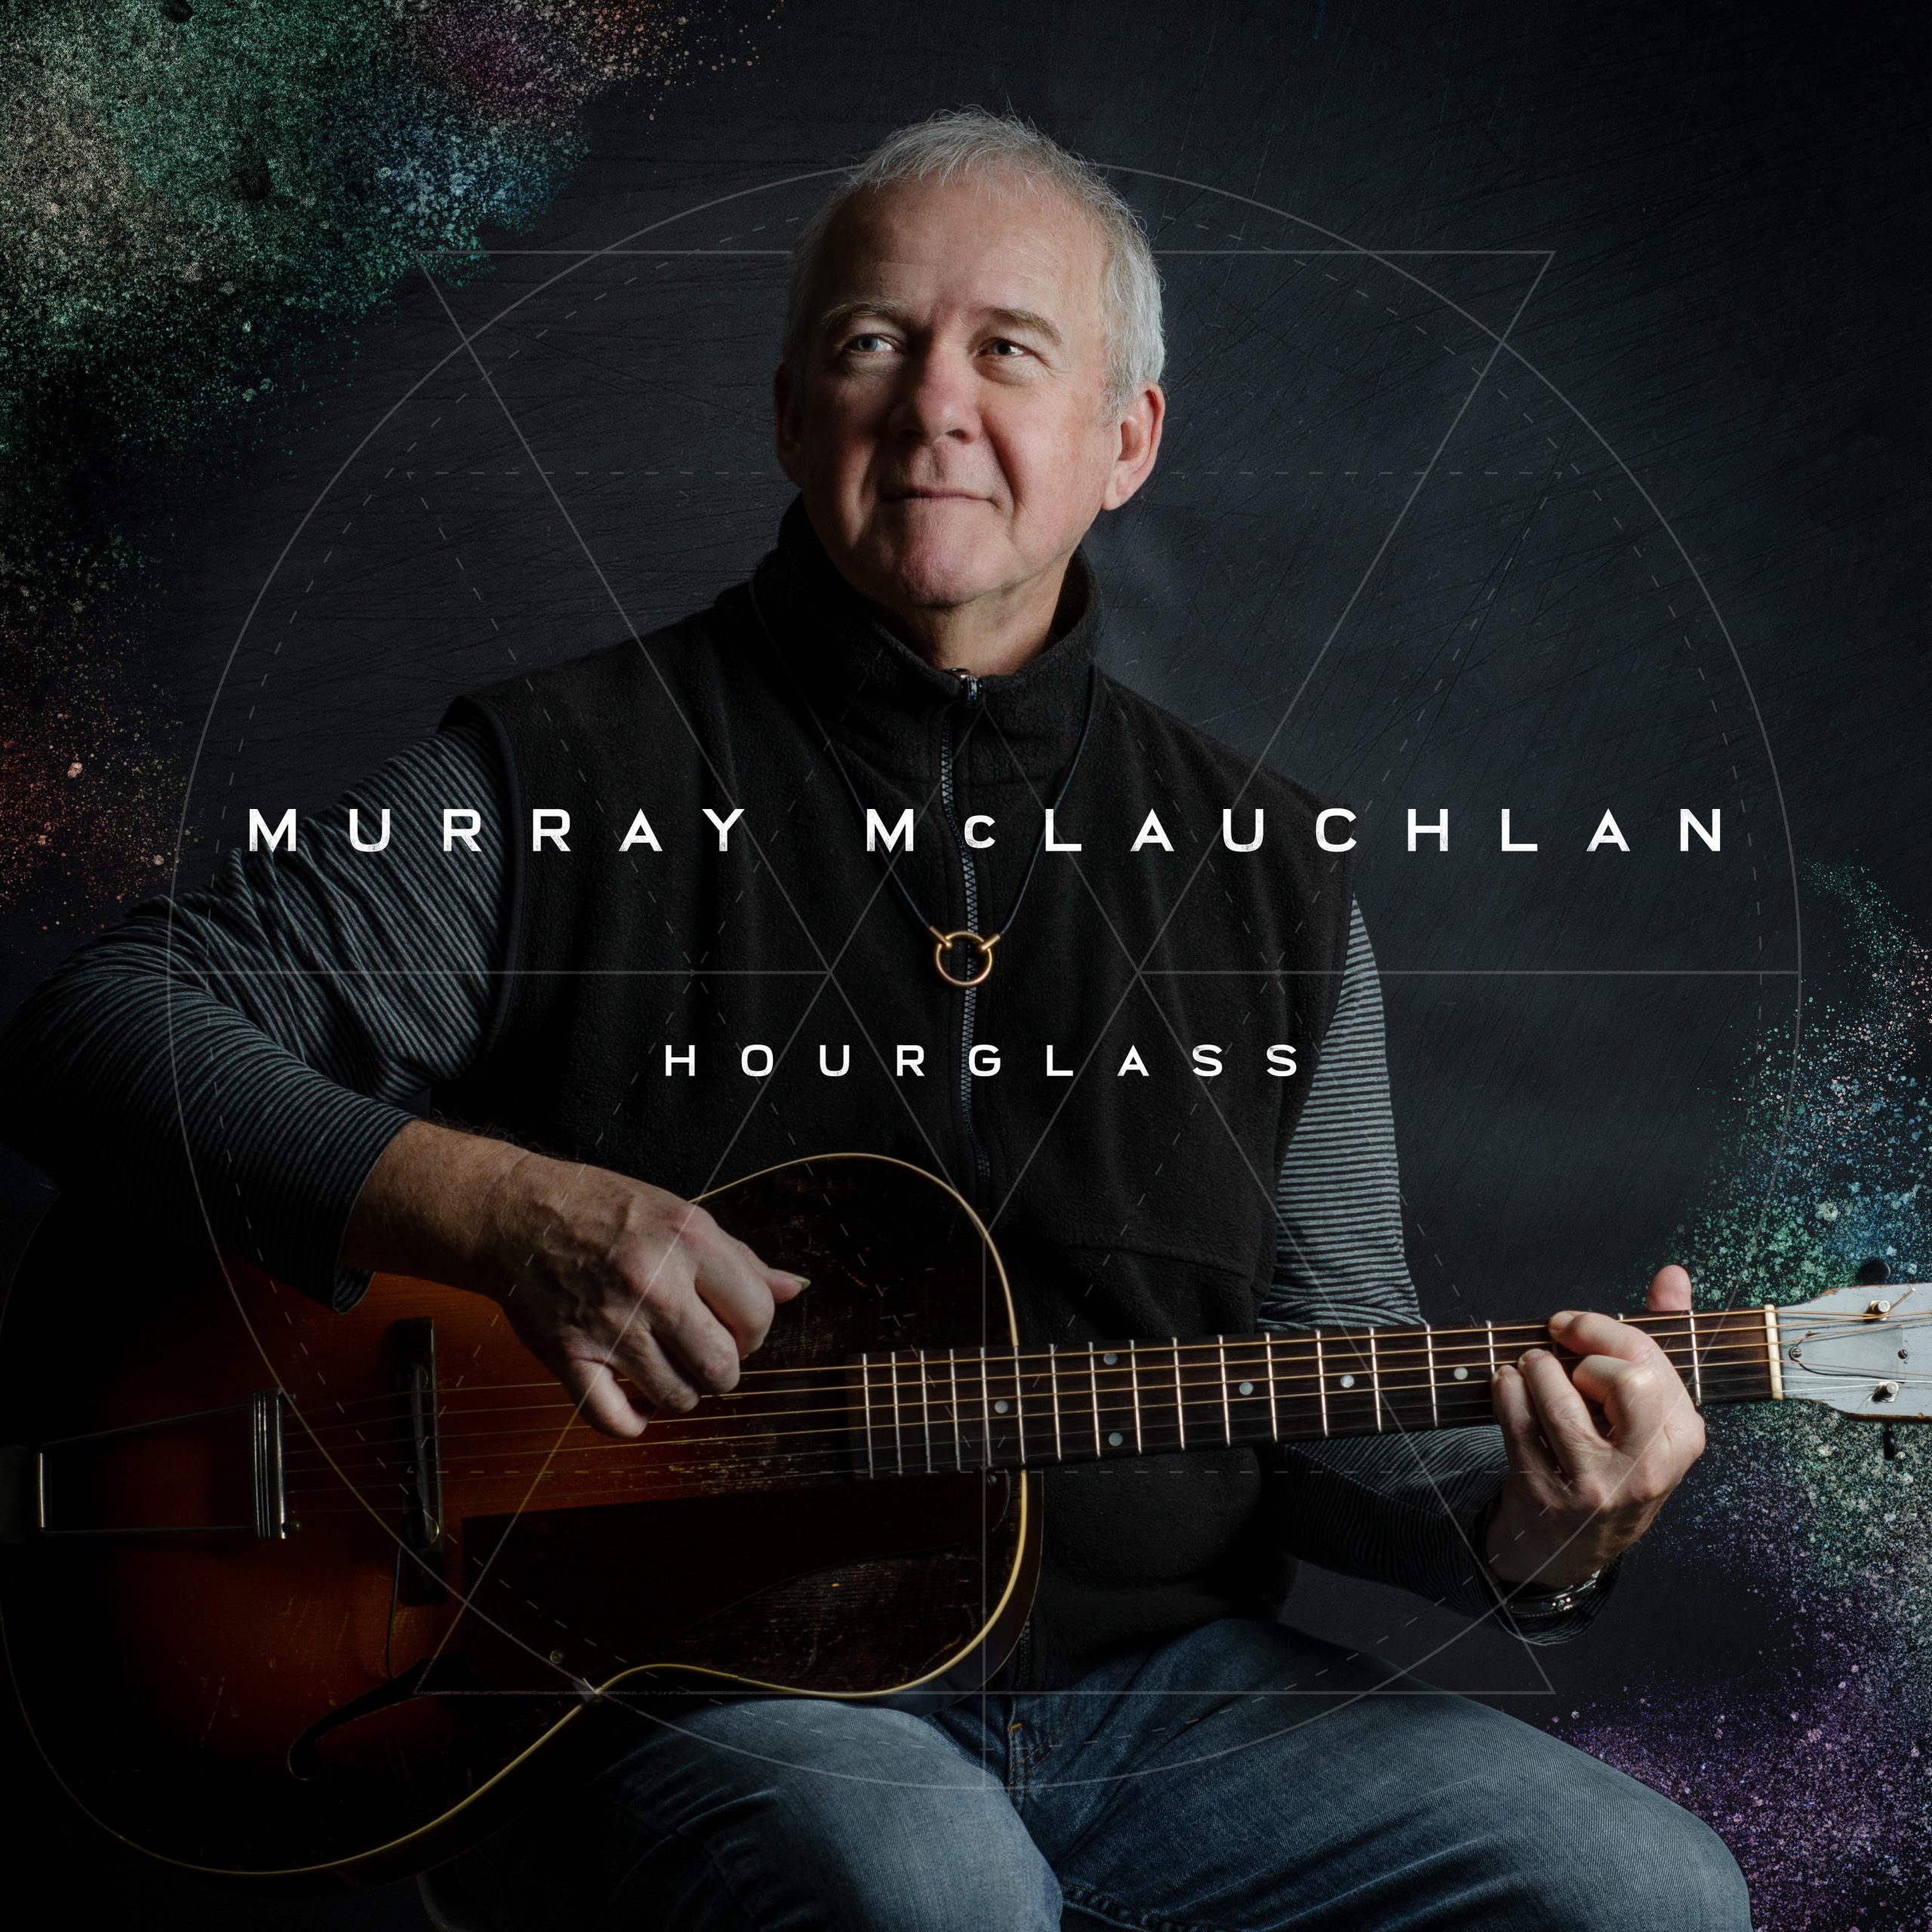 Murray McLauchlan Speaks to Racism & Privilege on New Album, "Hourglass"